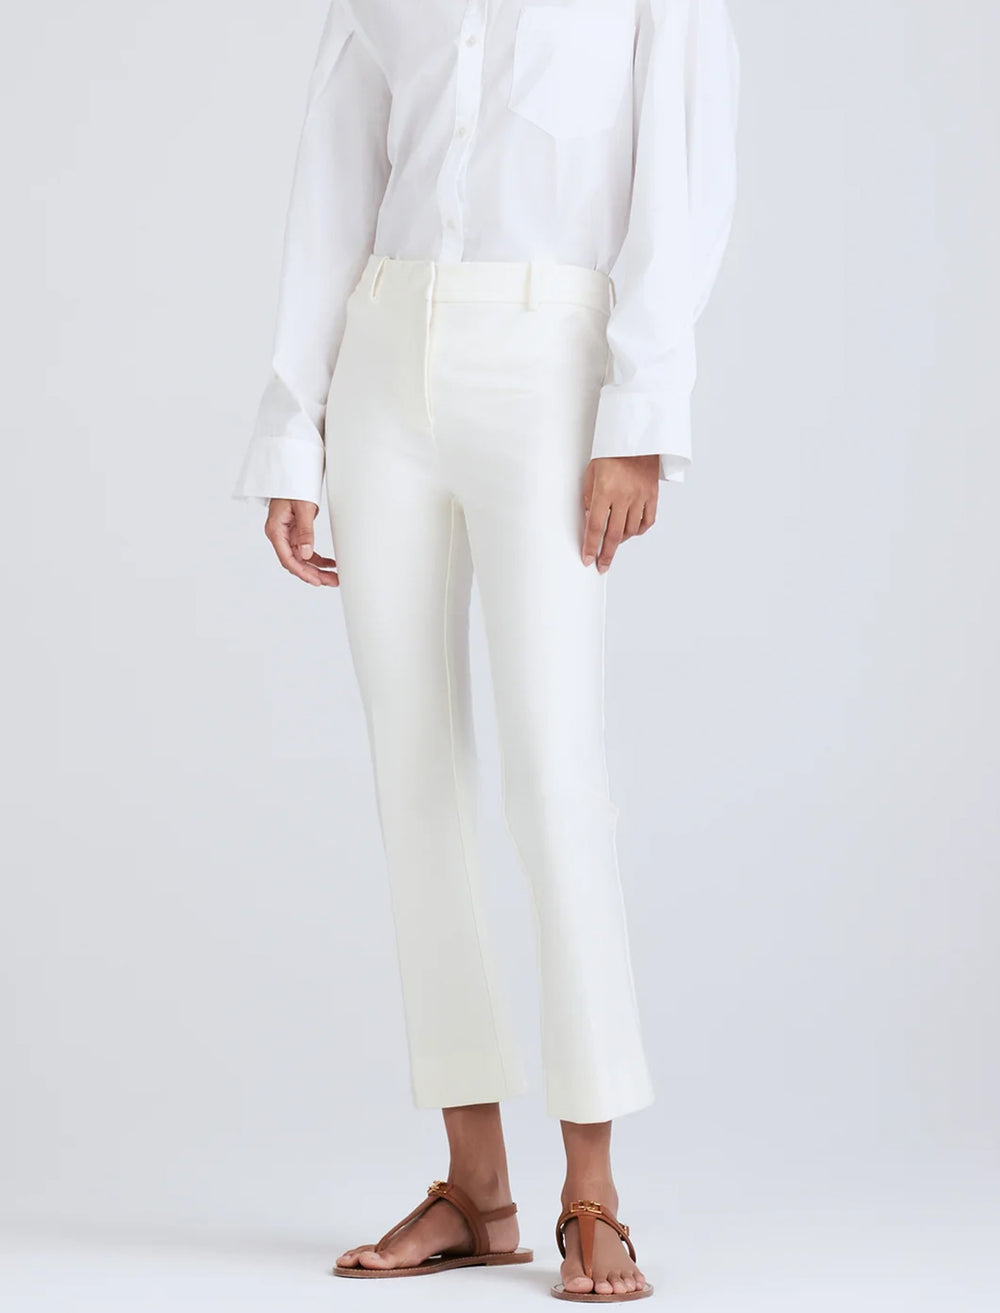 Model wearing Derek Lam 10 Crosby's crosby cropped flare trousers in white.